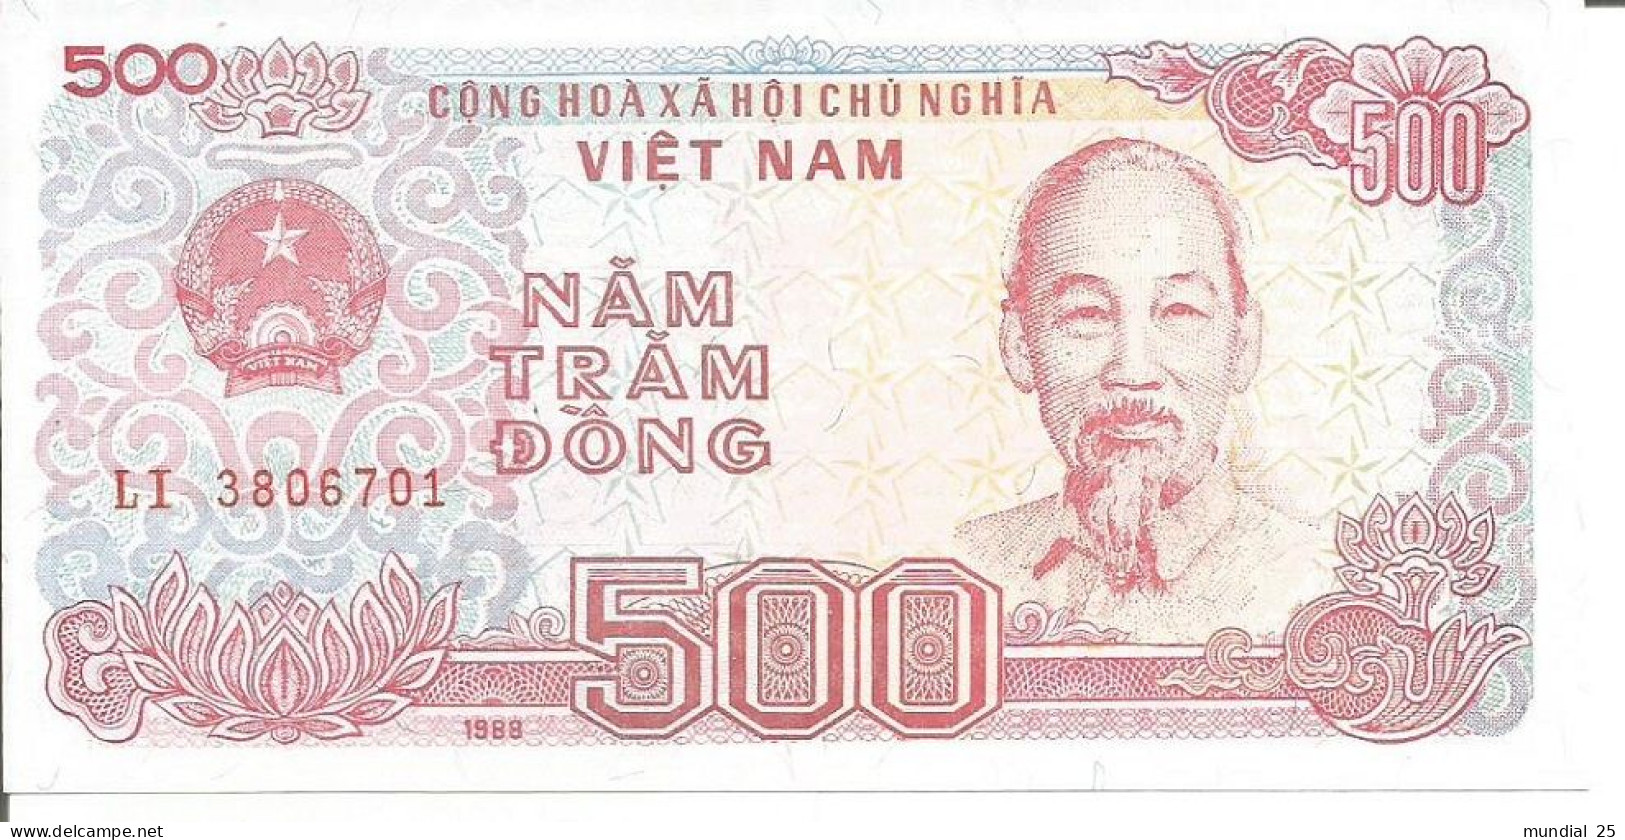 3 VIETNAM NOTES 500 DONG 1988 - Vietnam